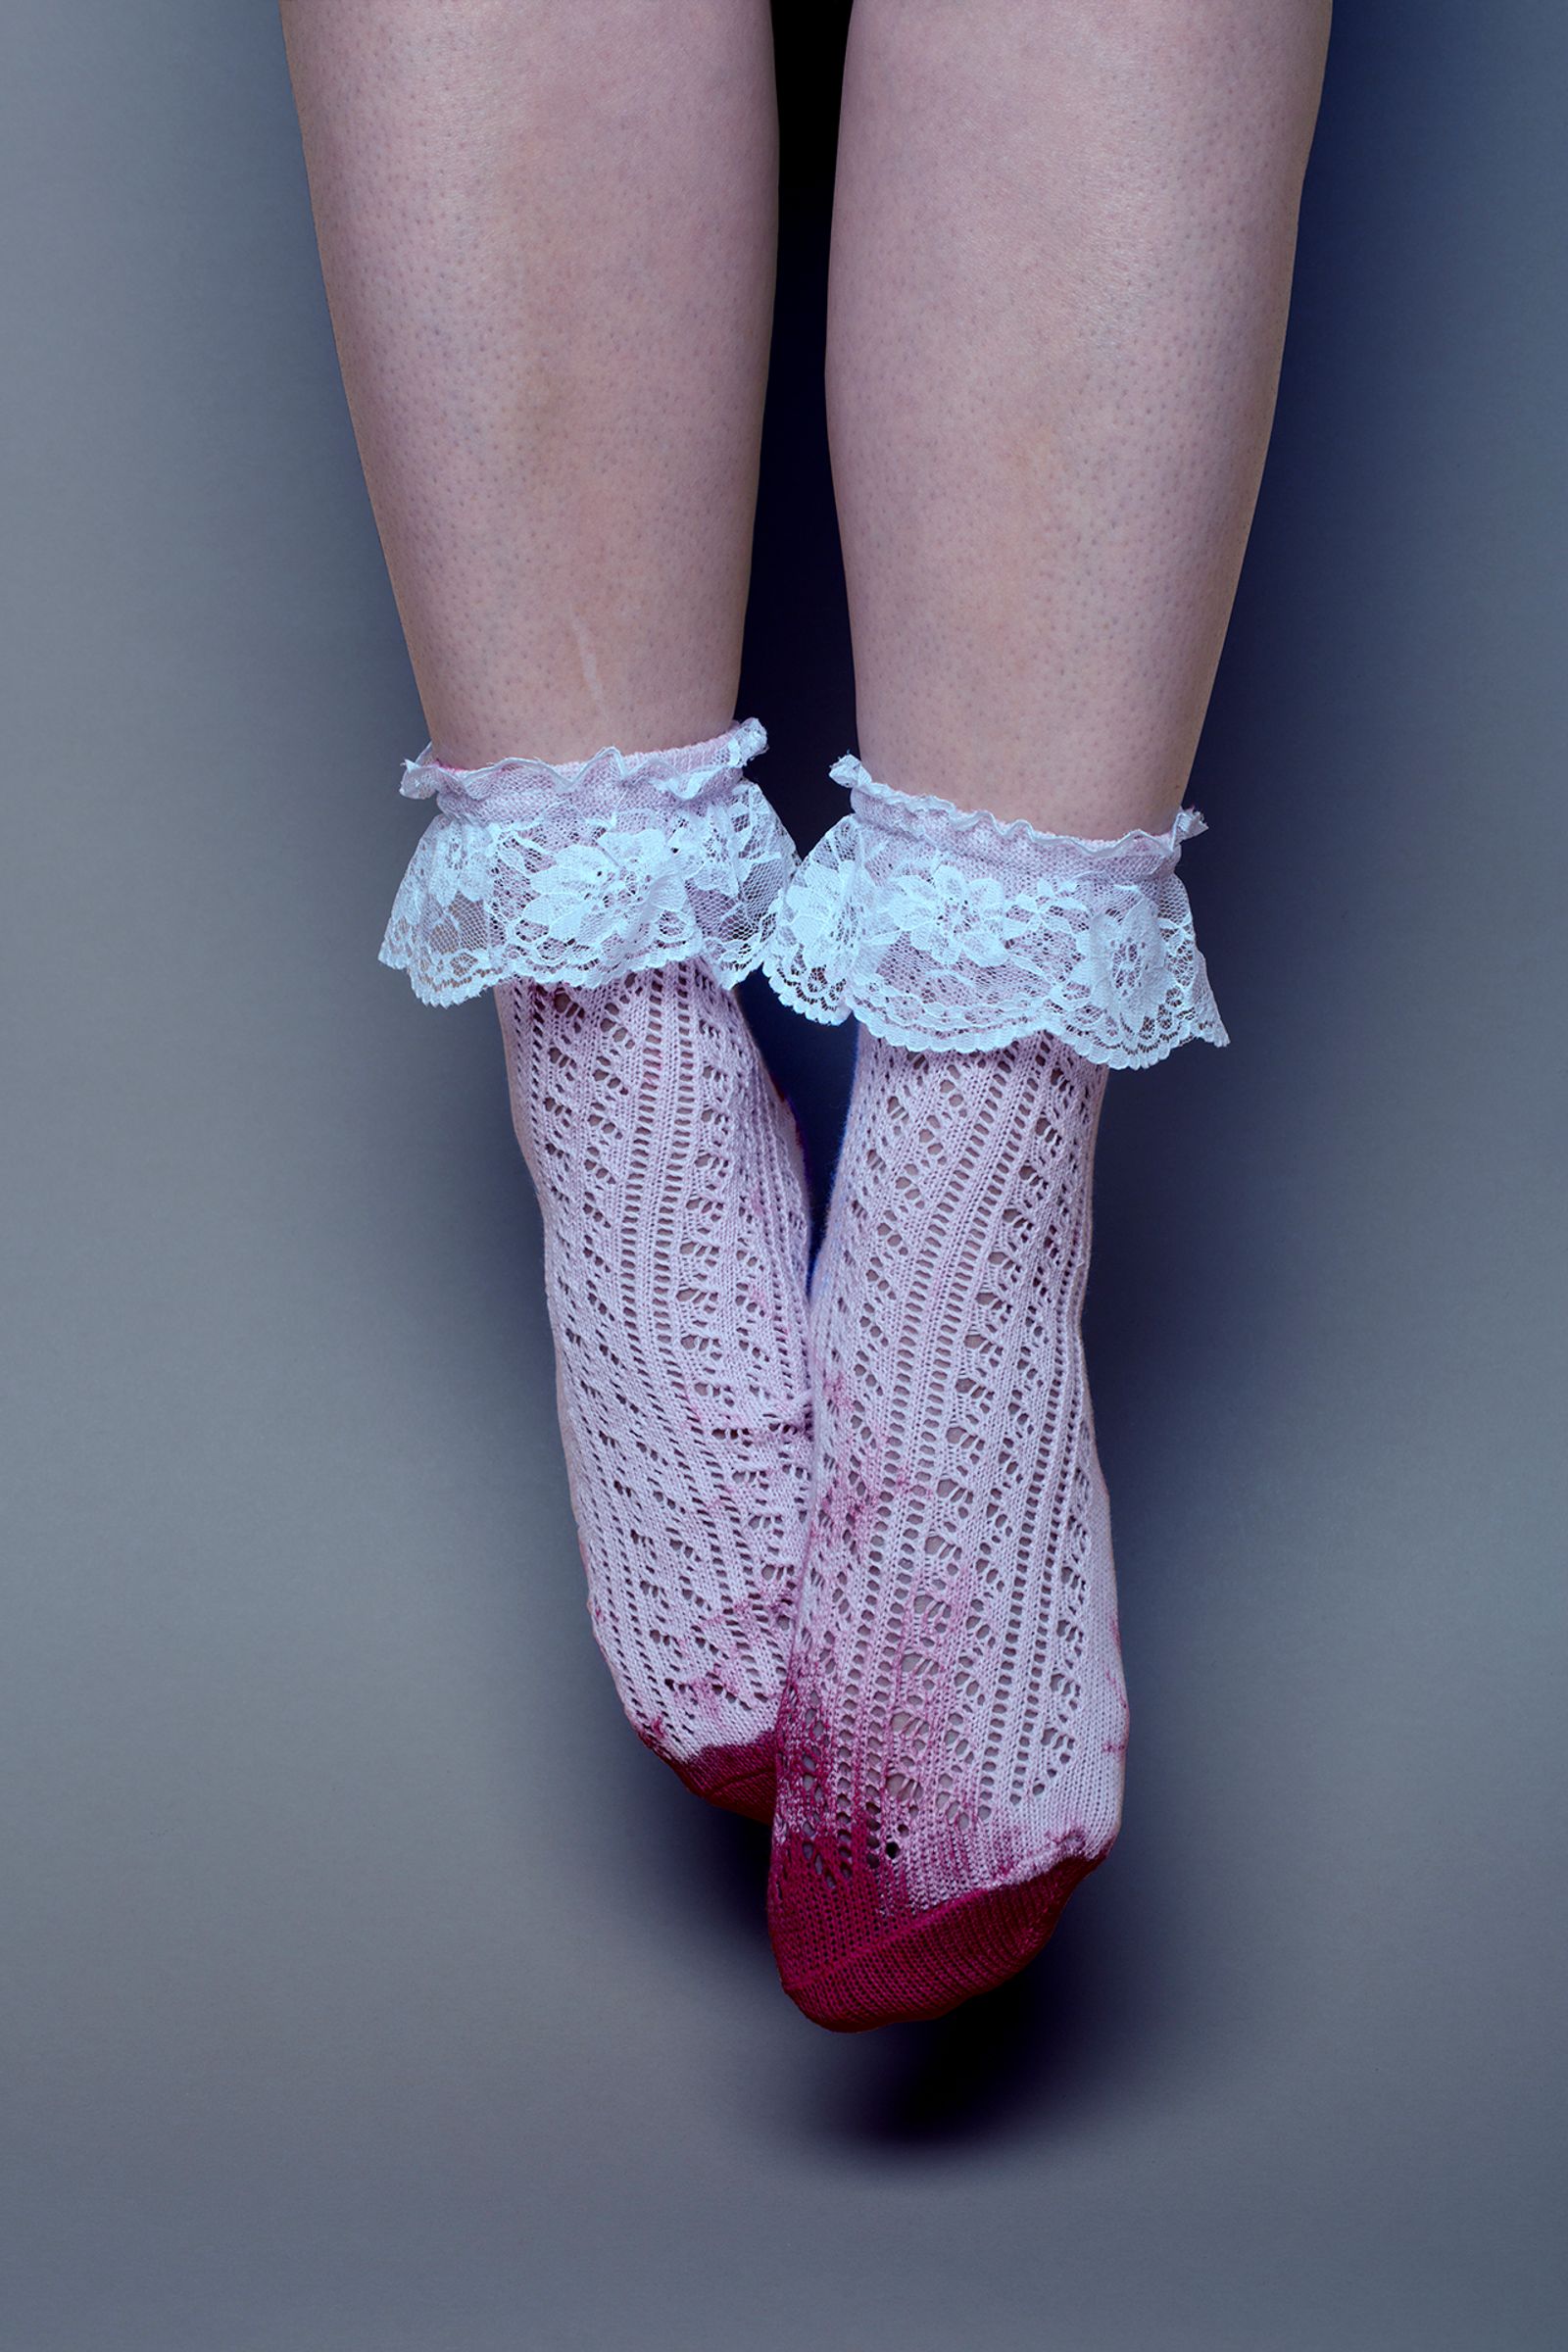 © Ana Espinal - Pink Socks, Archival inkjet print, 20 x 30 in. or smaller size.